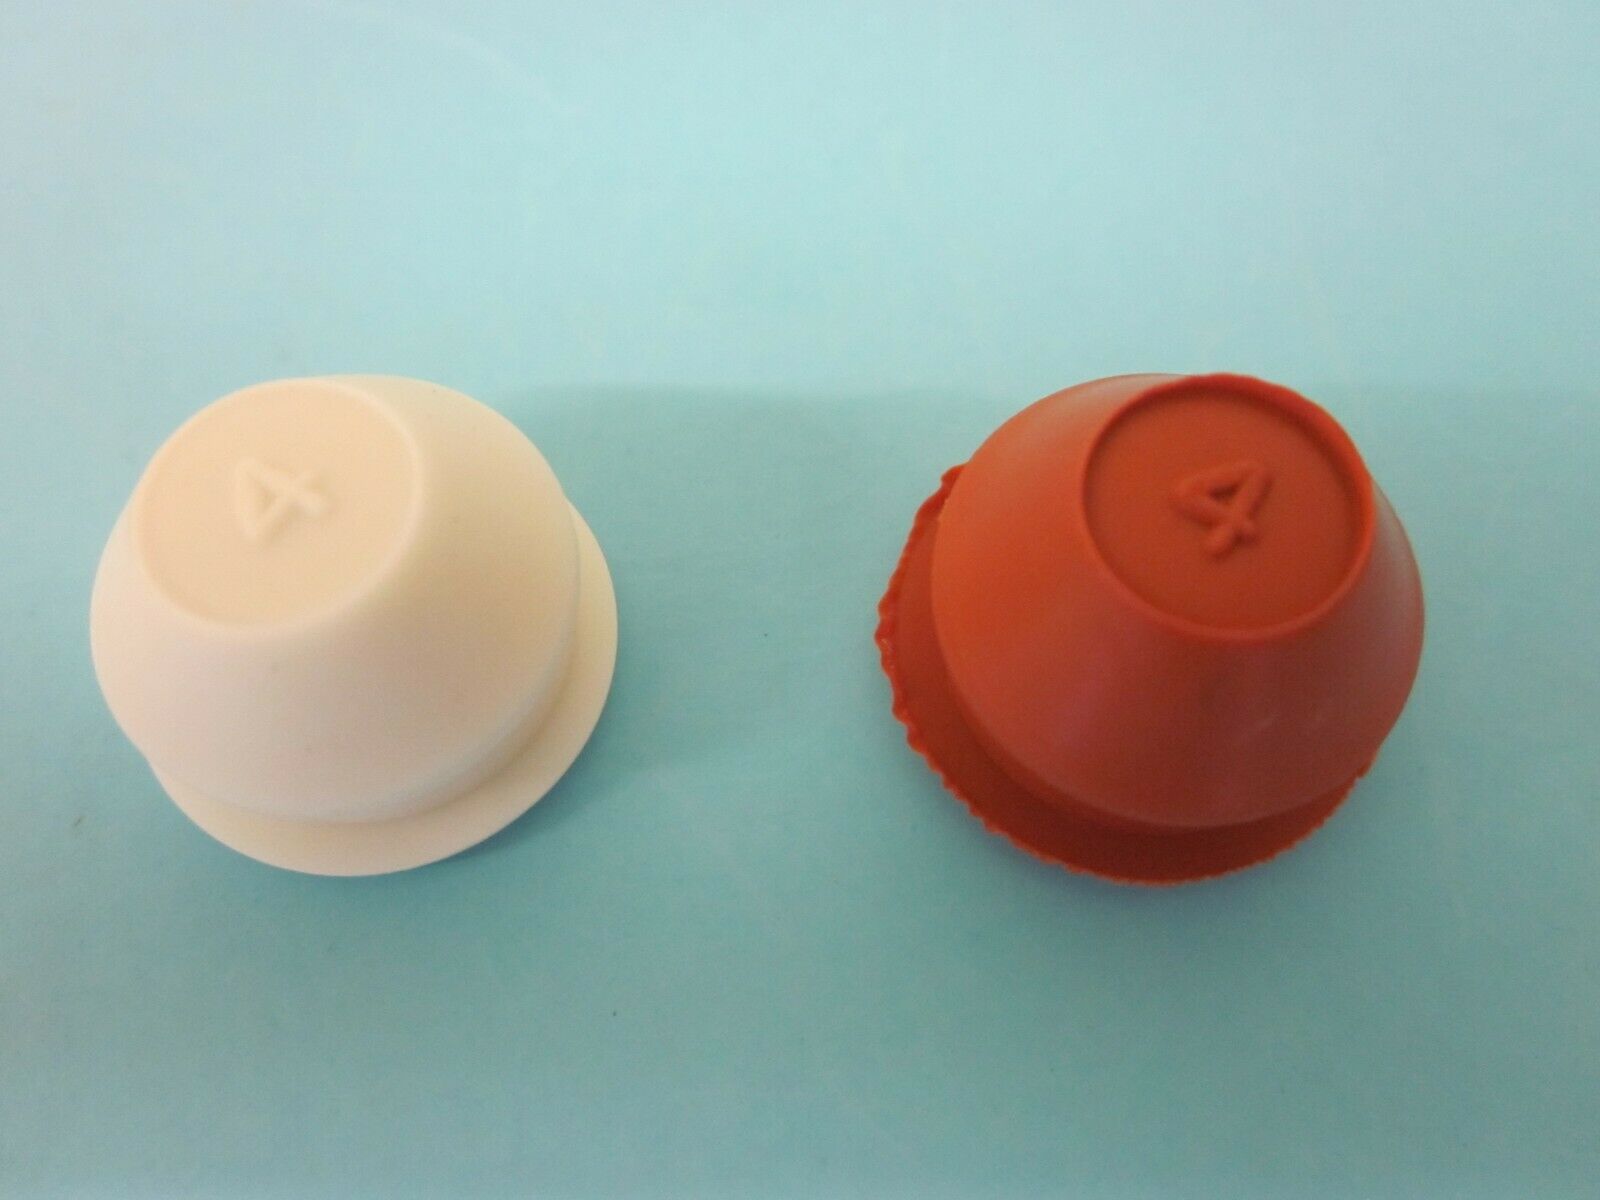 Rubber Stoppers For Homer Fiestaware Salt & Pepper Shakers (2) 5/8" Made In Usa